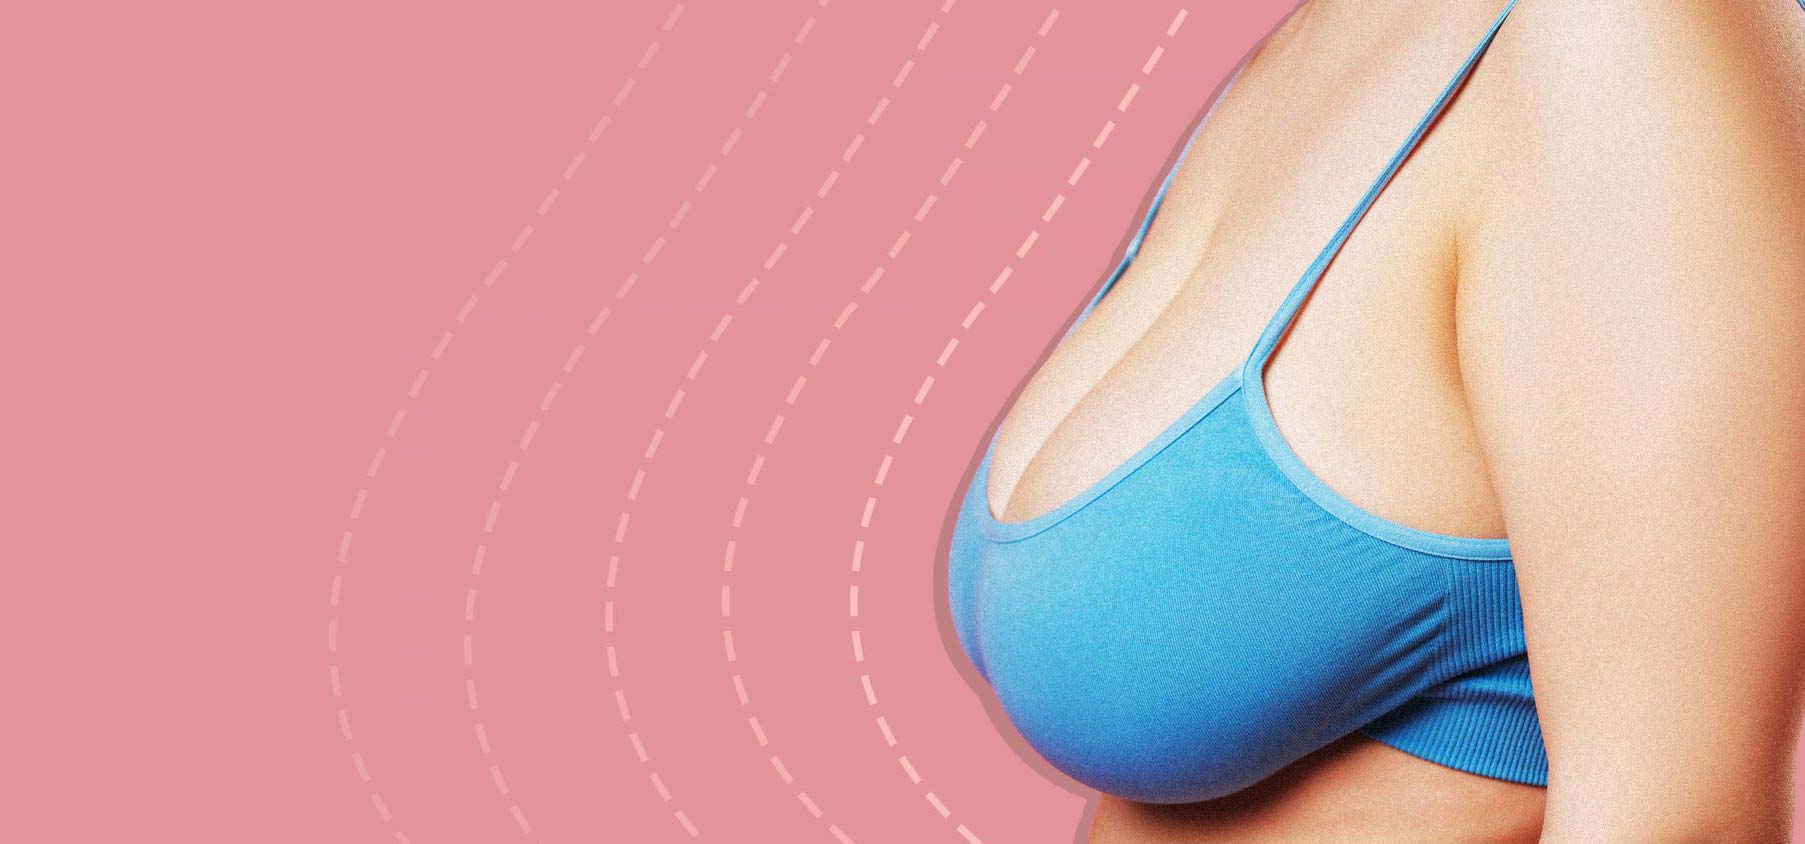 More mature Australian women are getting breast enlargements